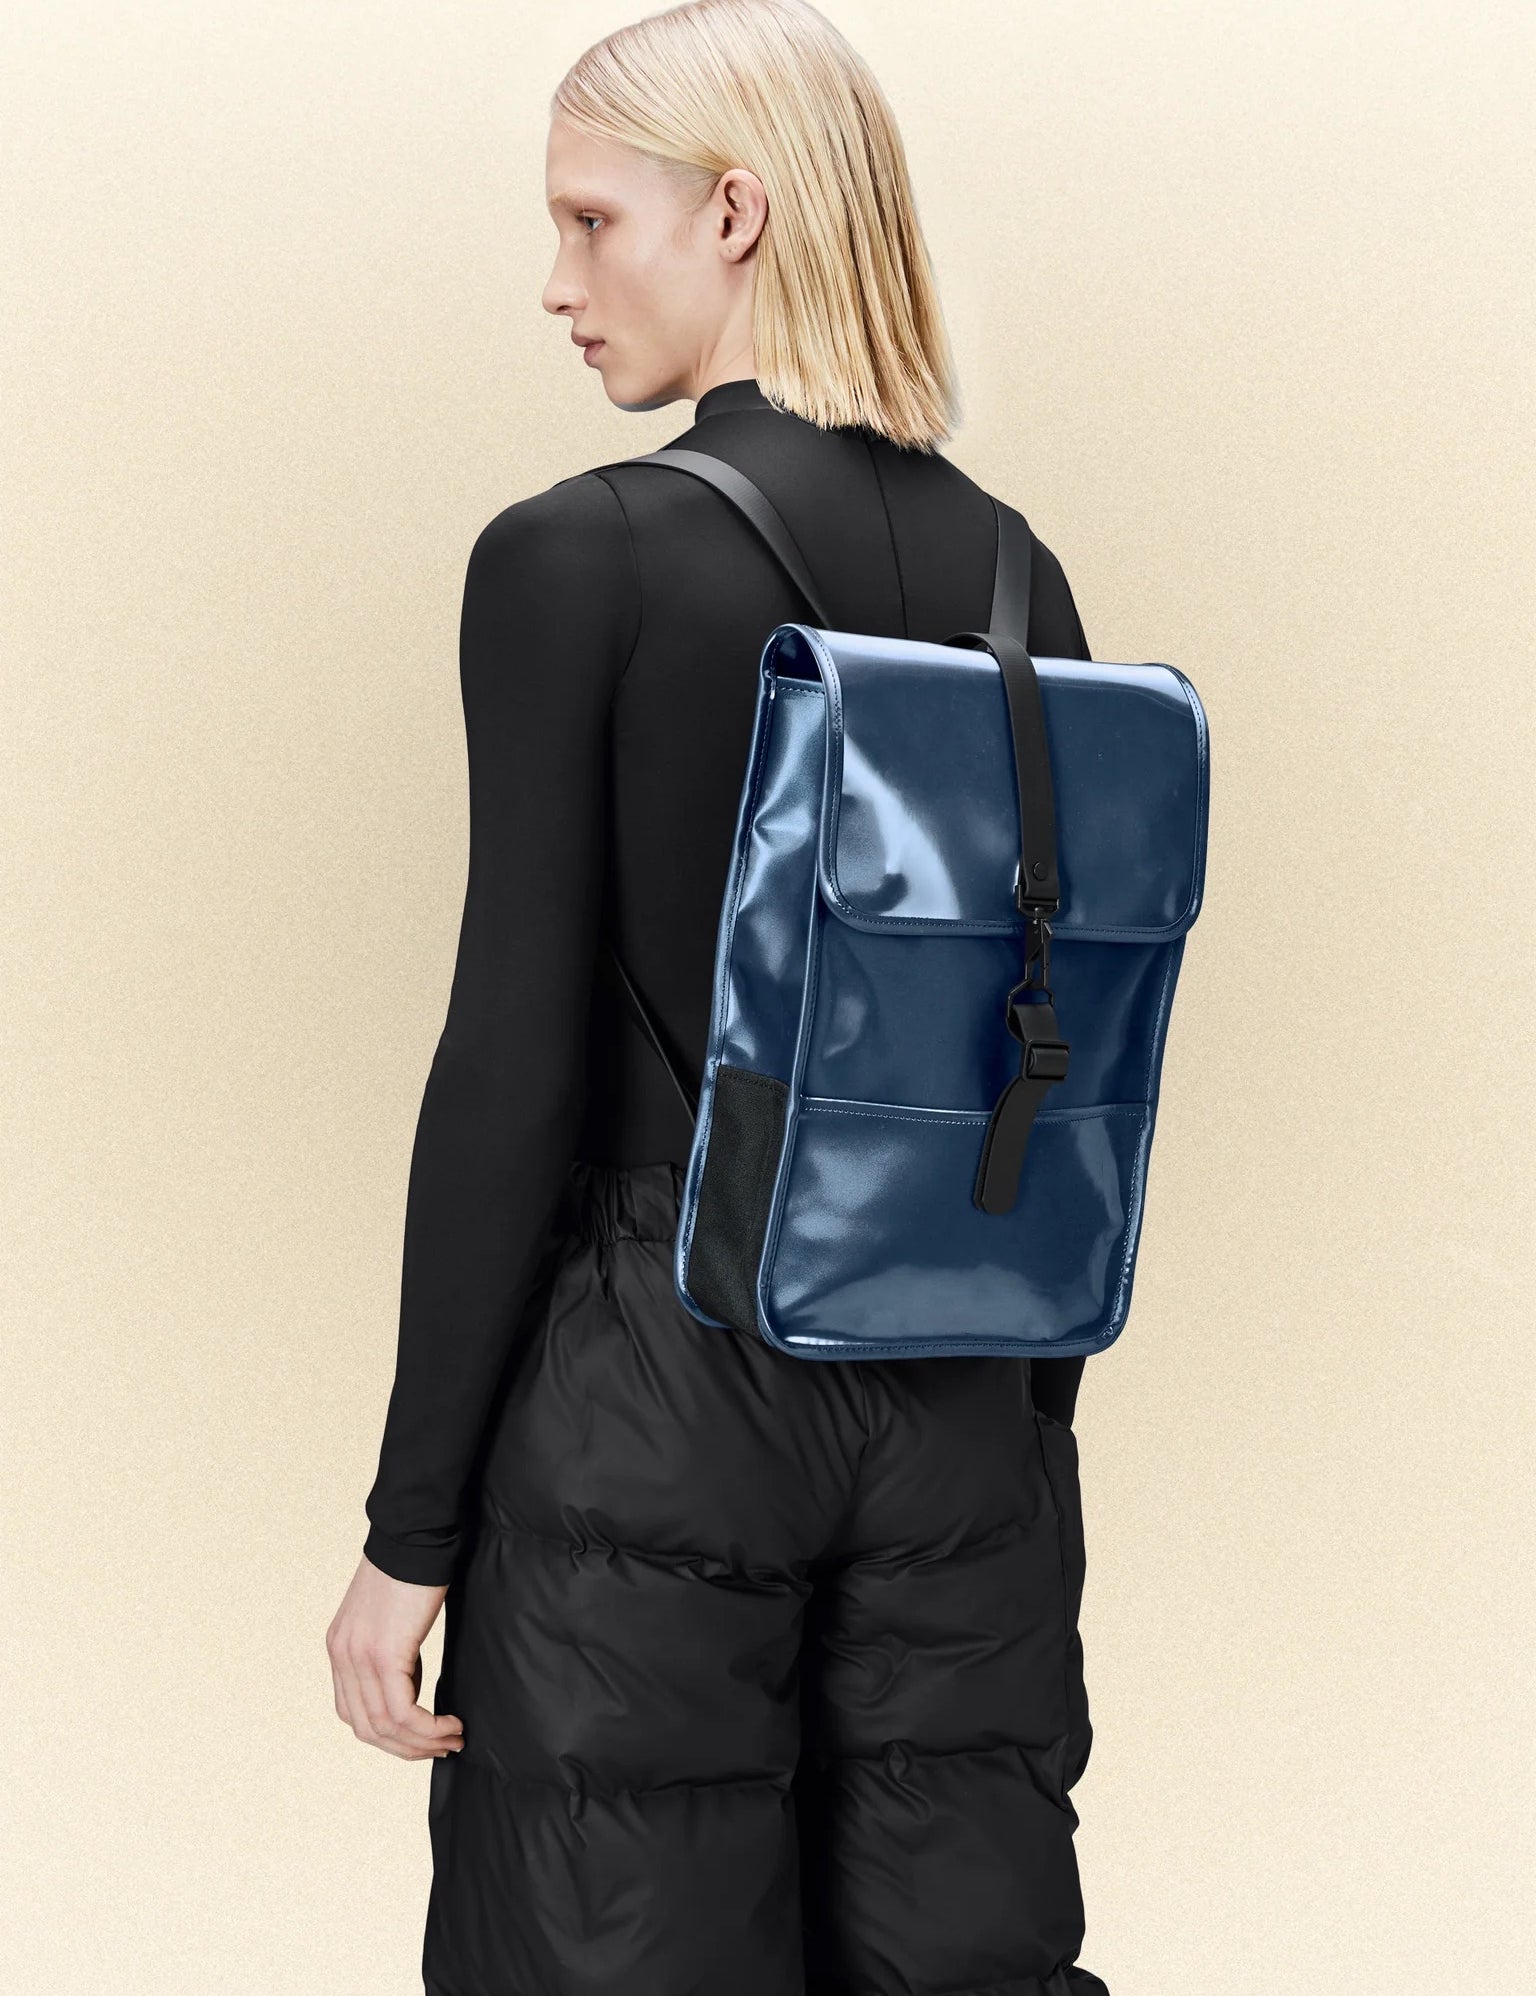 Backpack_Mini-Backpacks-13020-25_Sonic-31_jpg.jpg